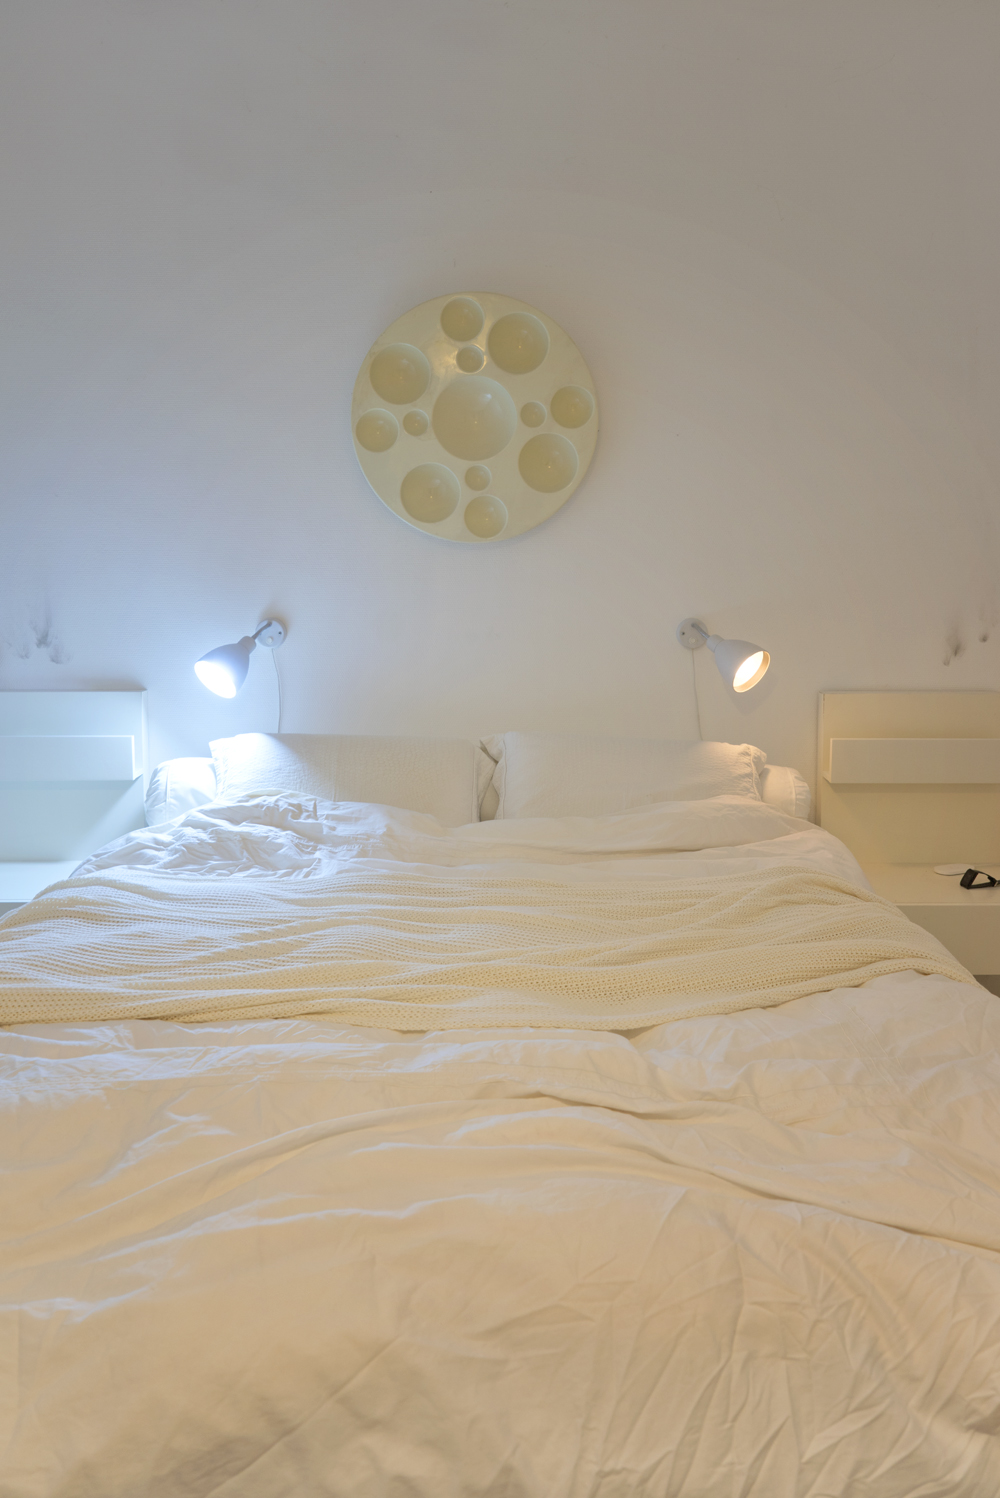 JOELIX.com | white bedroom with Philips Hue + giveaway